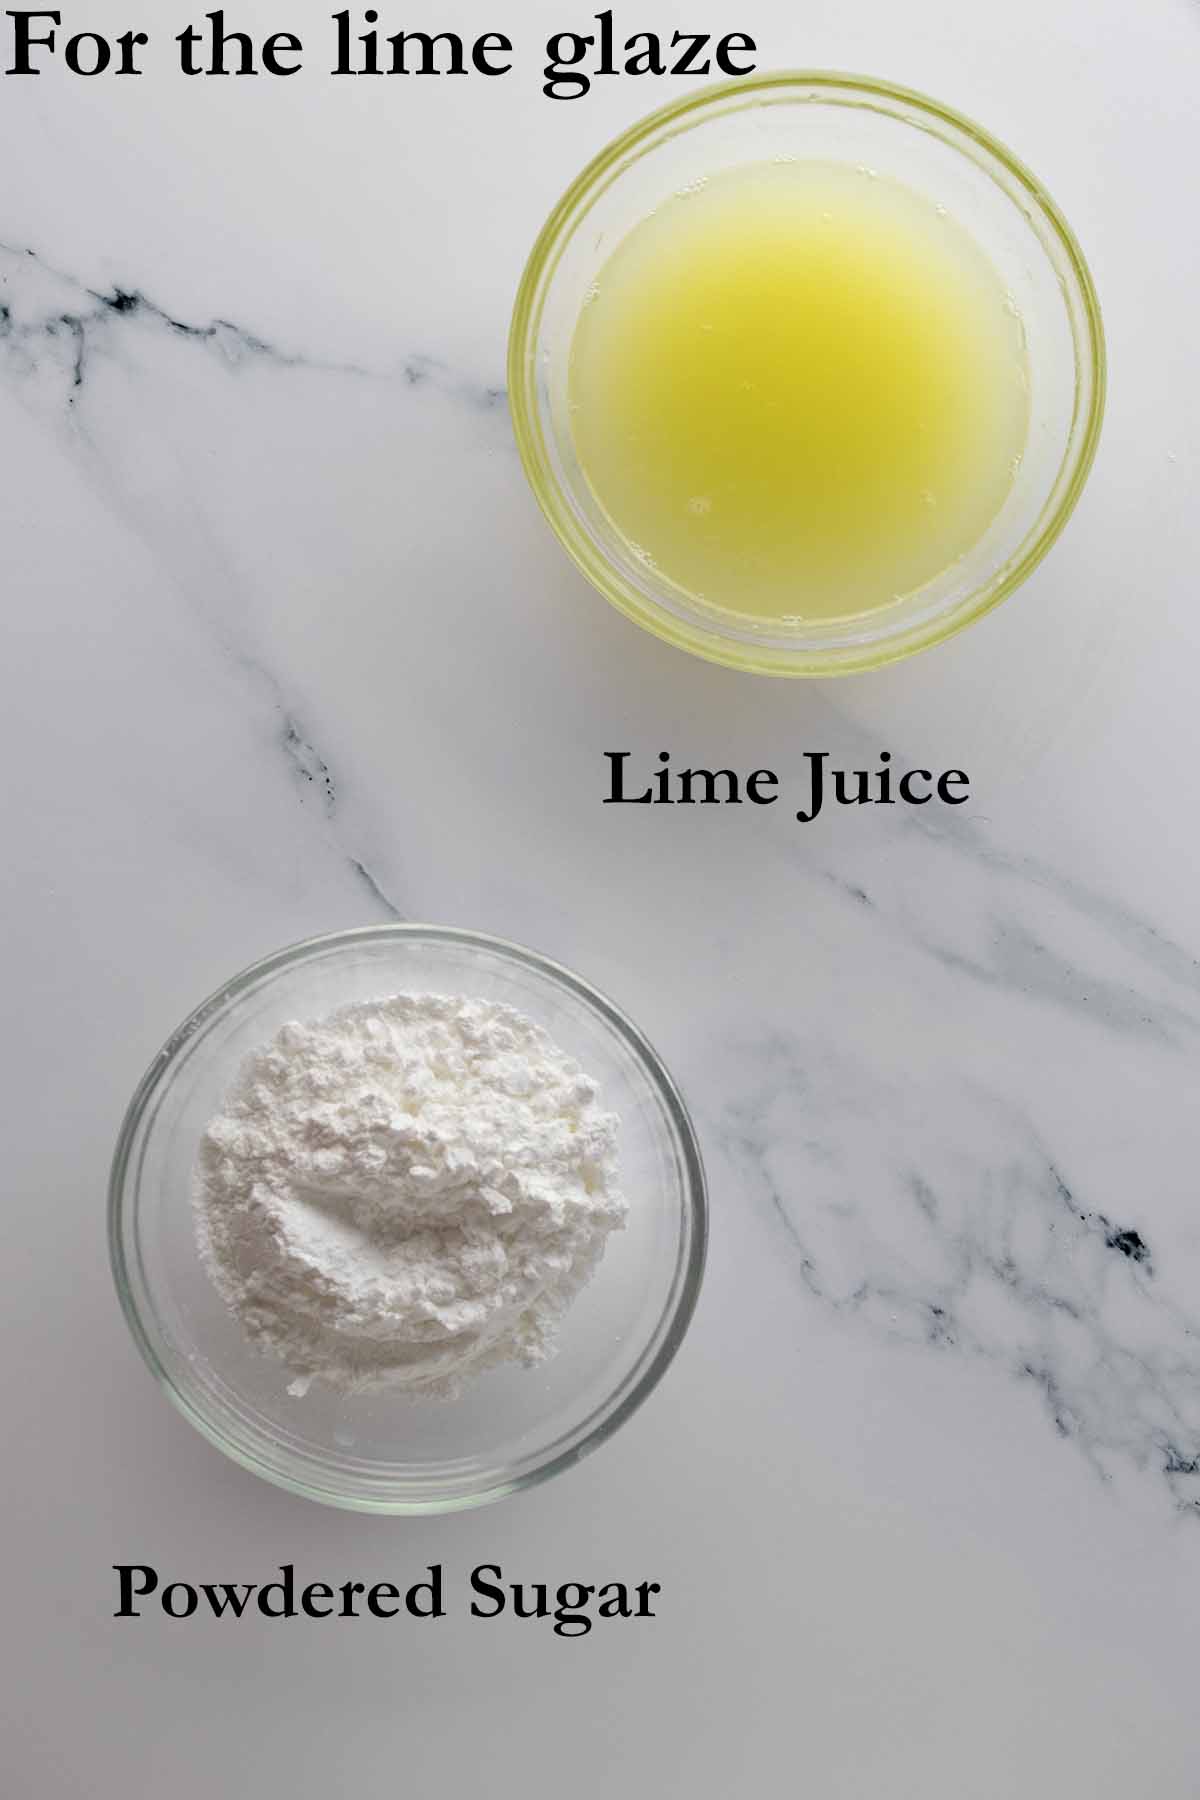 Lime glaze ingredients